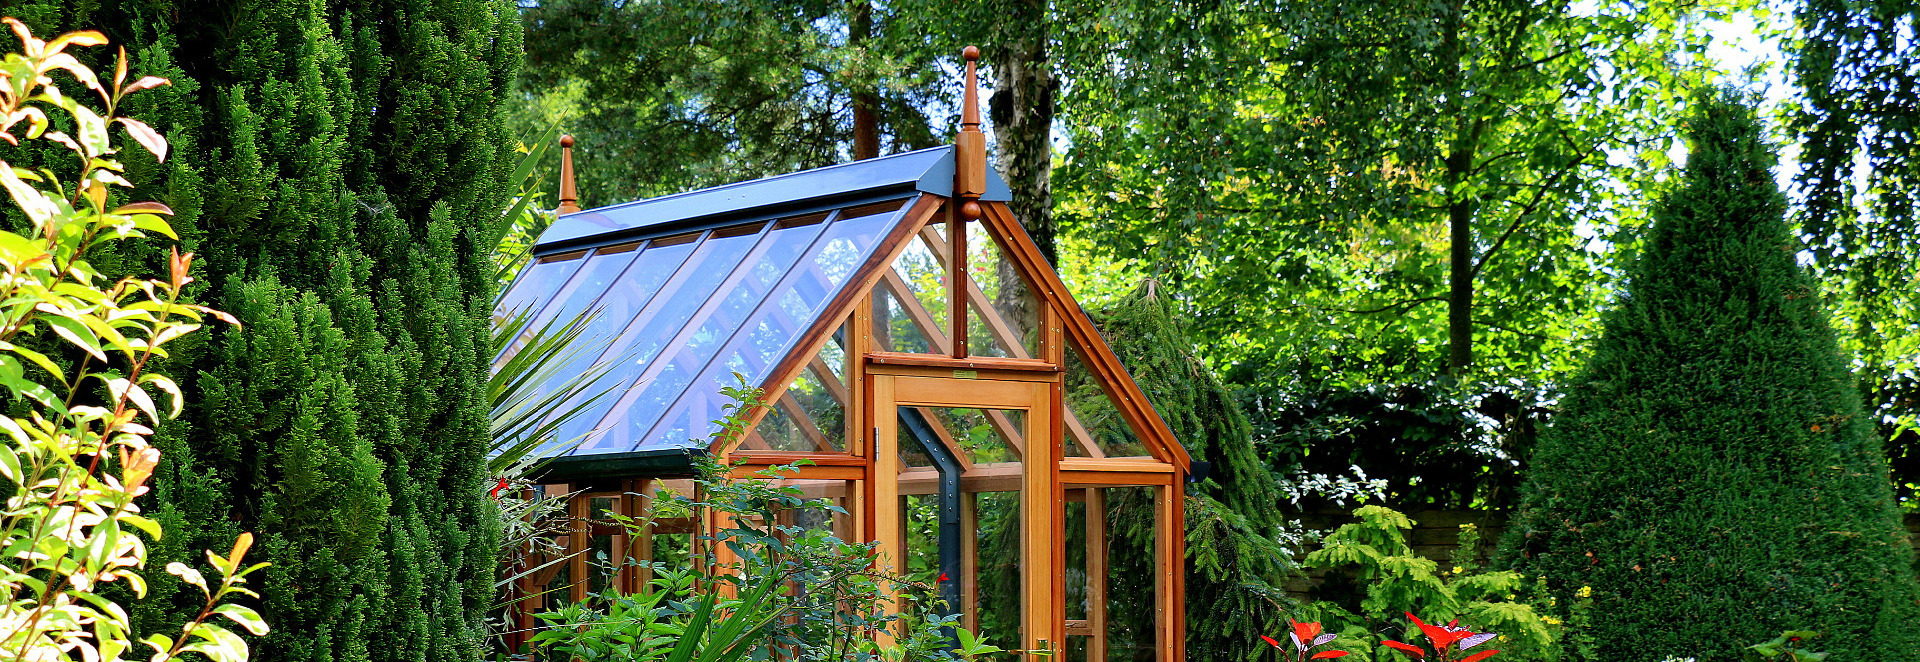 RHS Rosemoor Greenhouse - superior cedar greenhouses Ireland